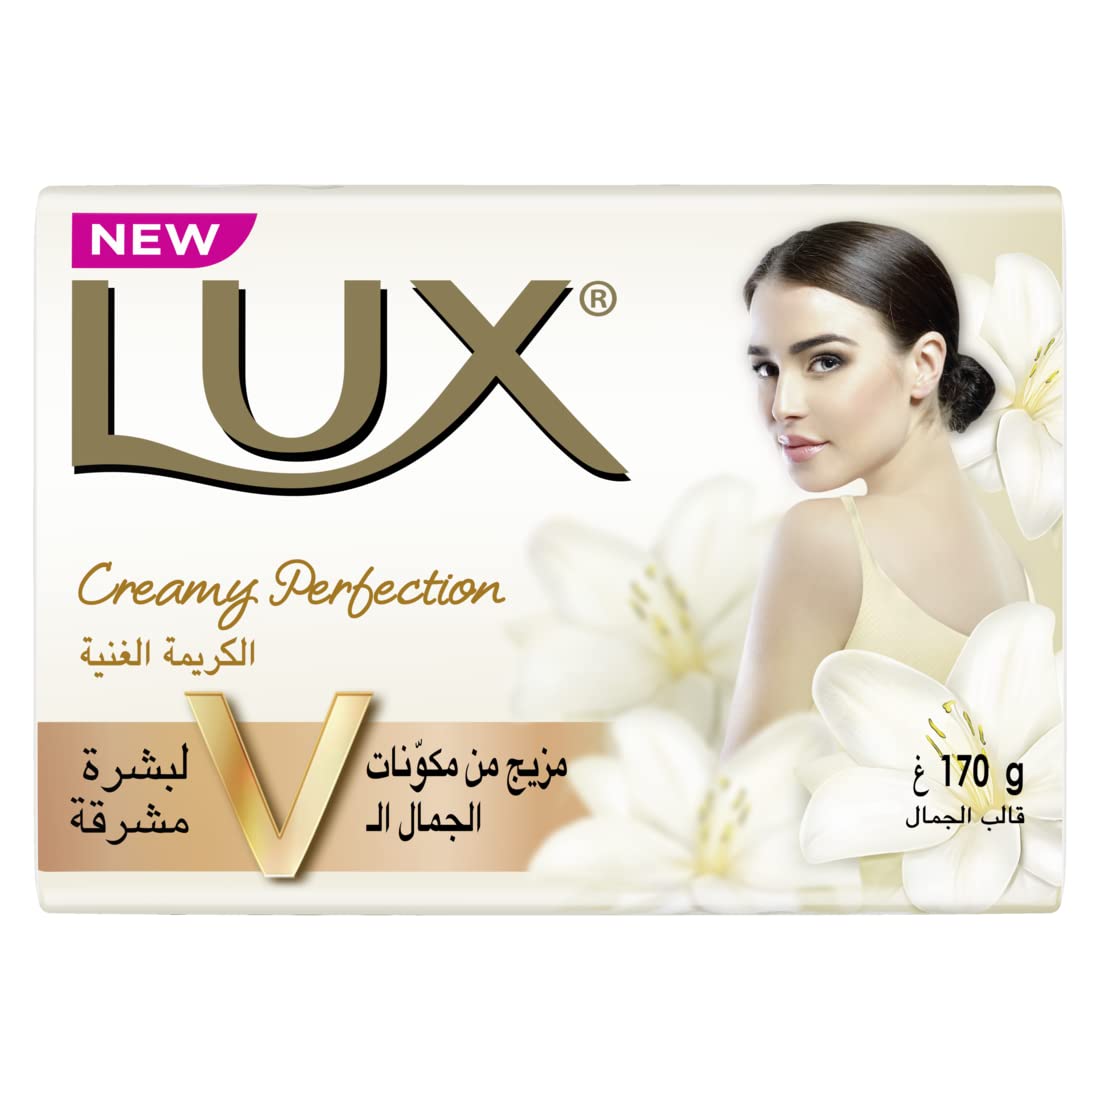 LUX SOAP Creamy Perbection 125Ml